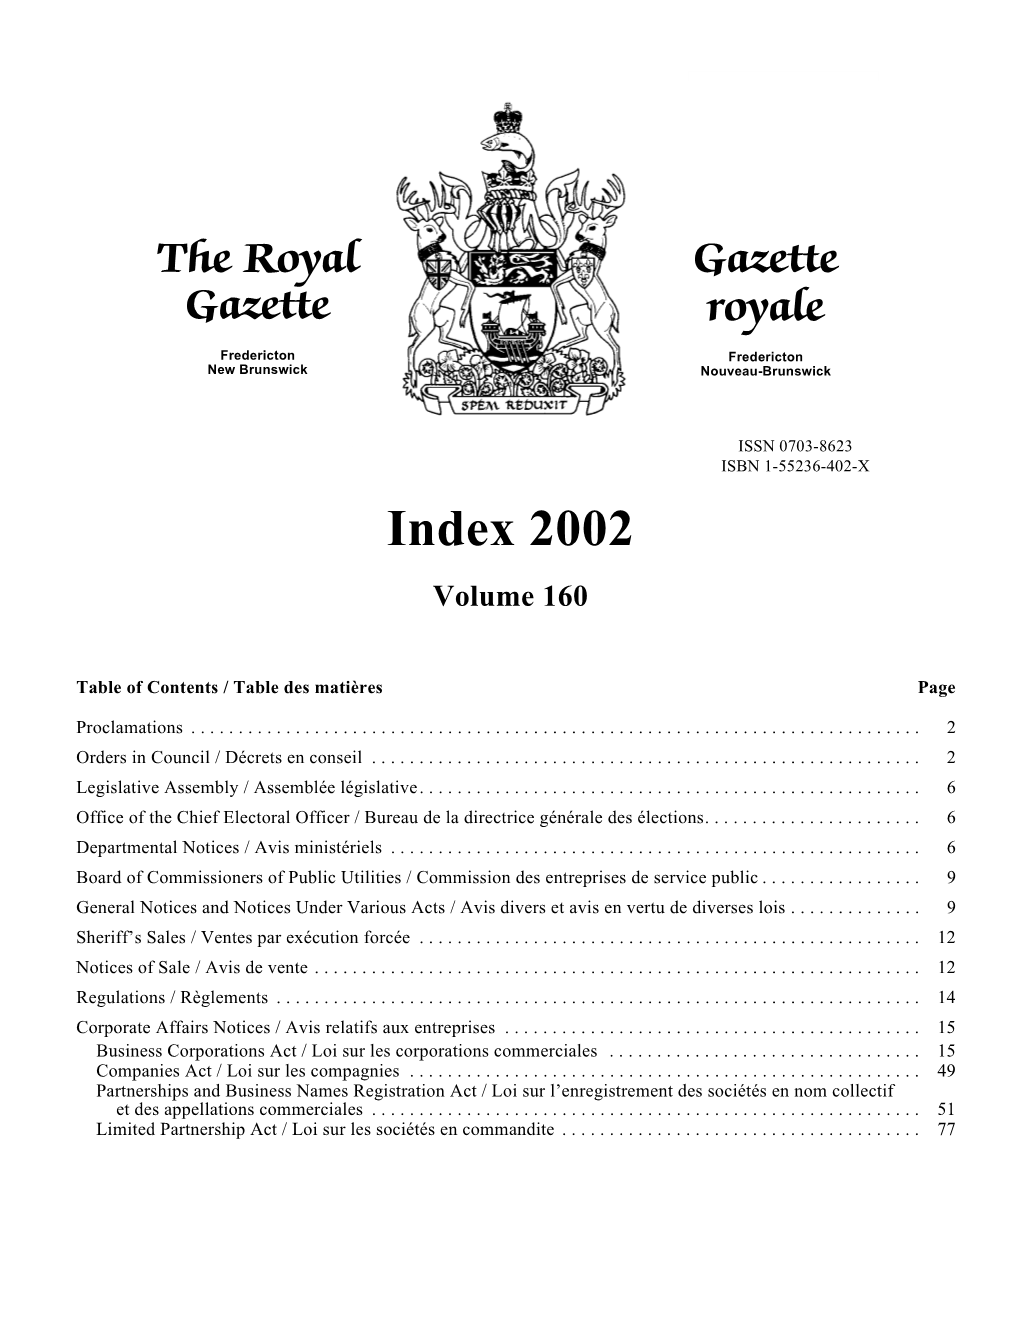 The Royal Gazette Index 2002